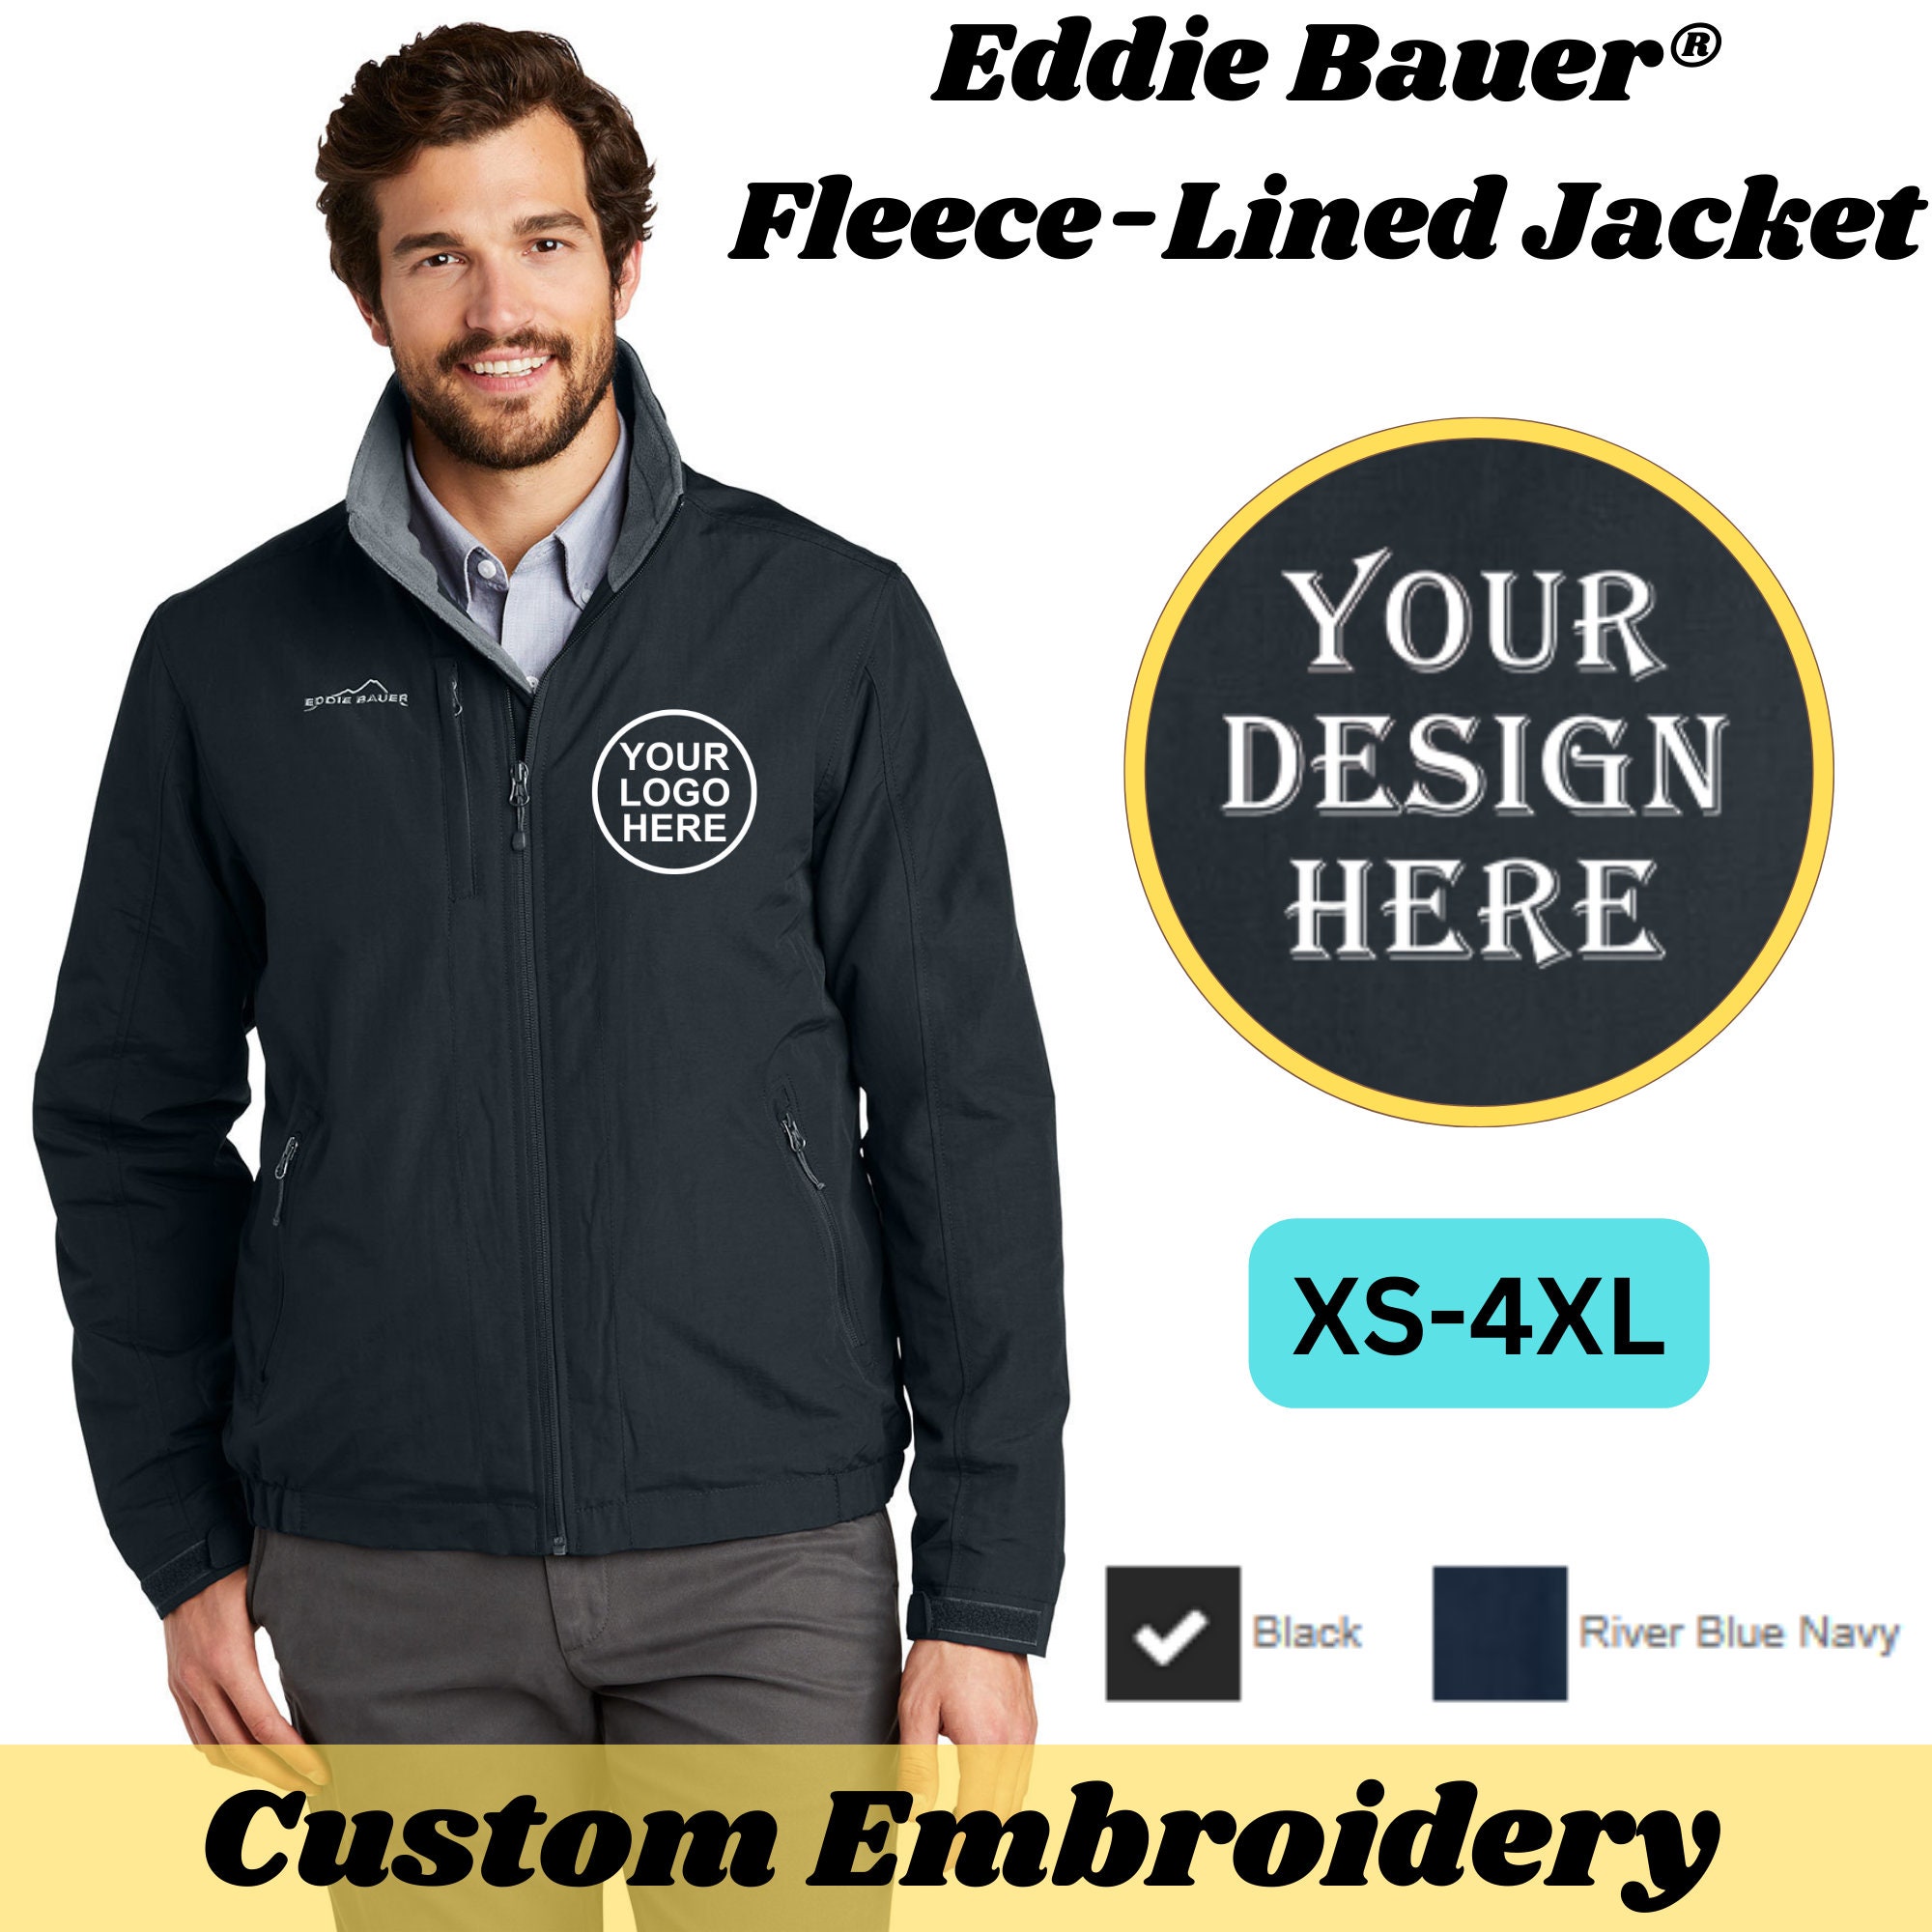 Eddie Bauer® – Fleece-Lined Jacket